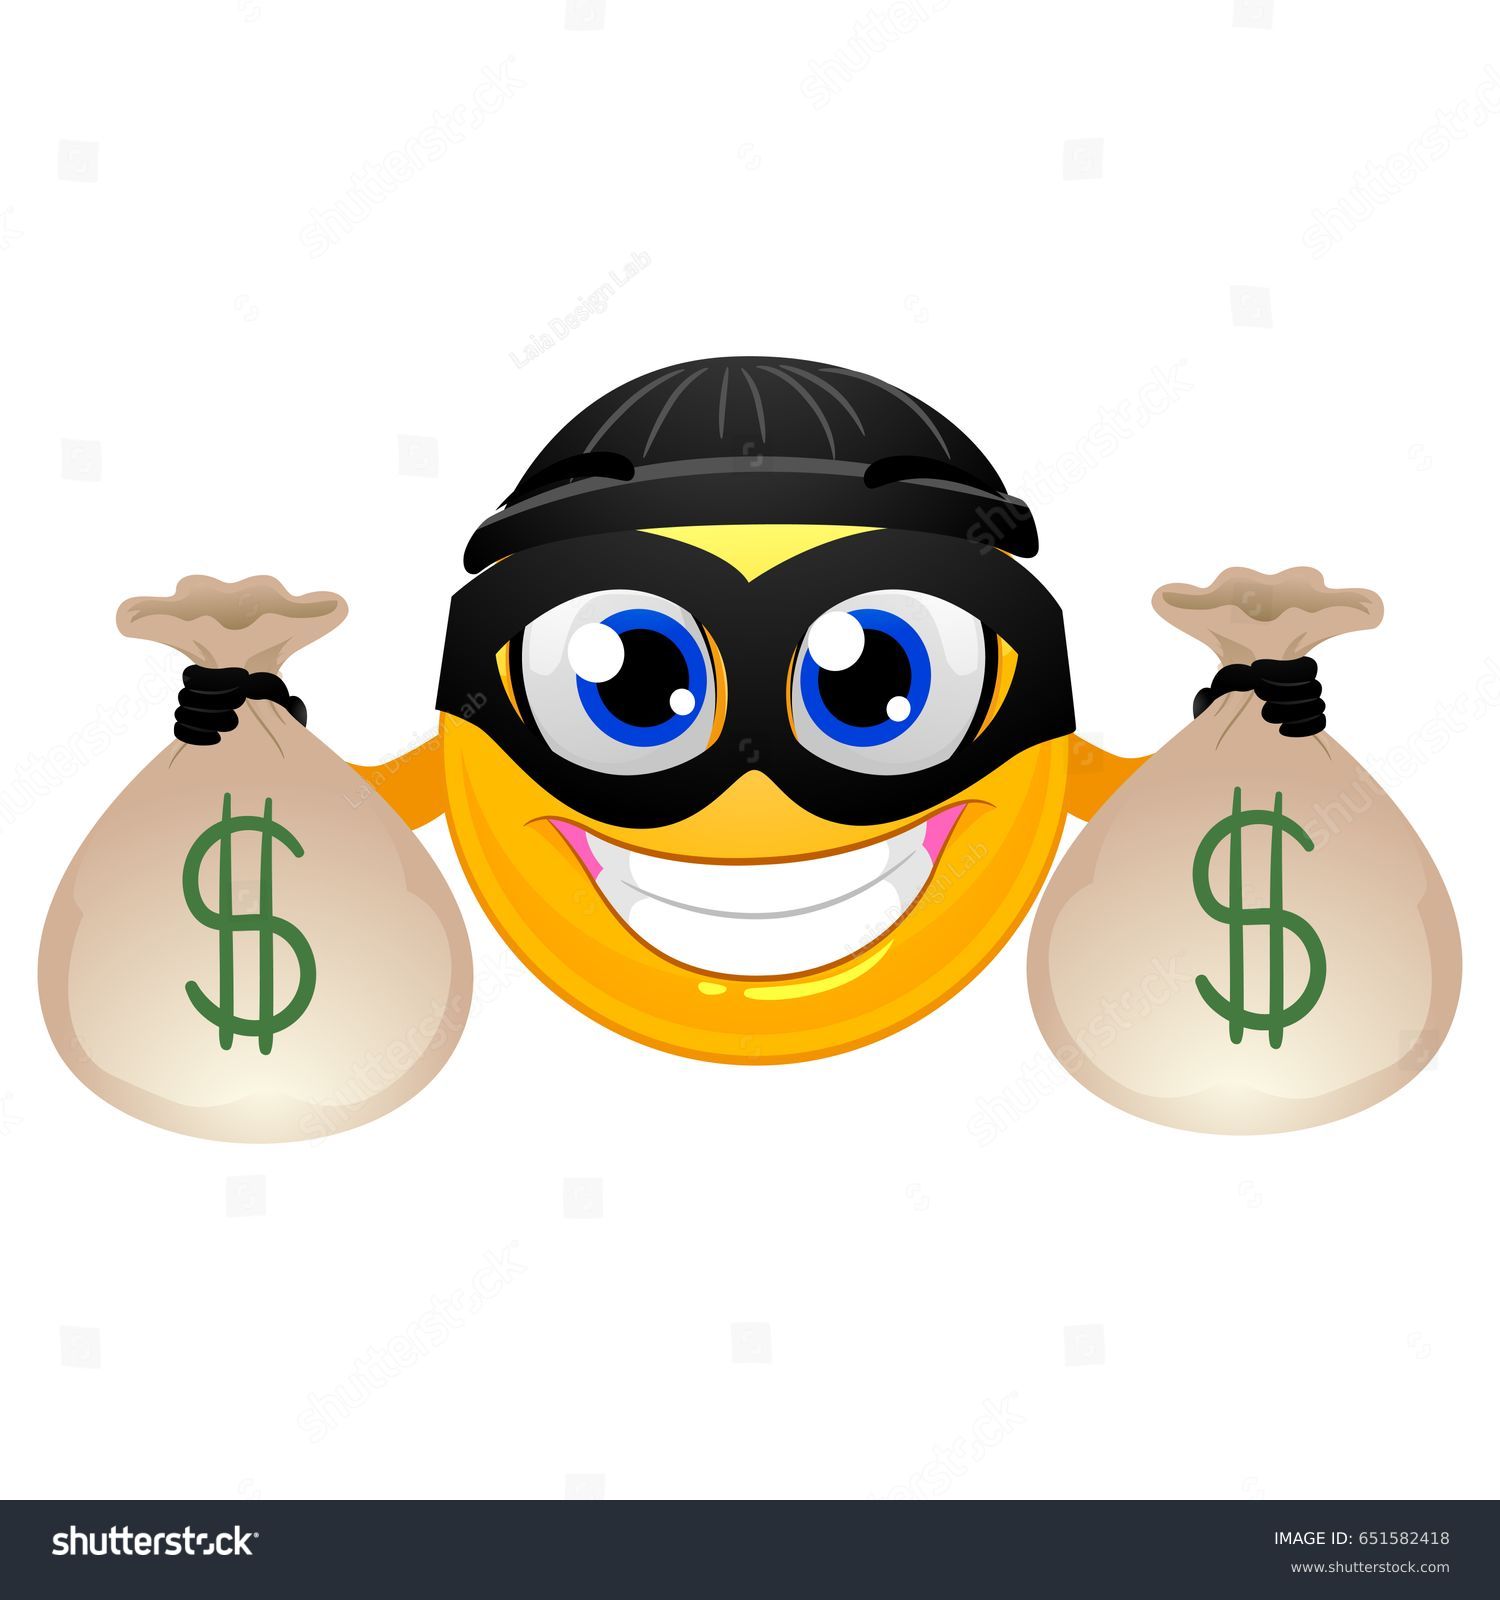 SVG of Vector Illustration of Smiley Emoticon Burglar holding Money Bag svg